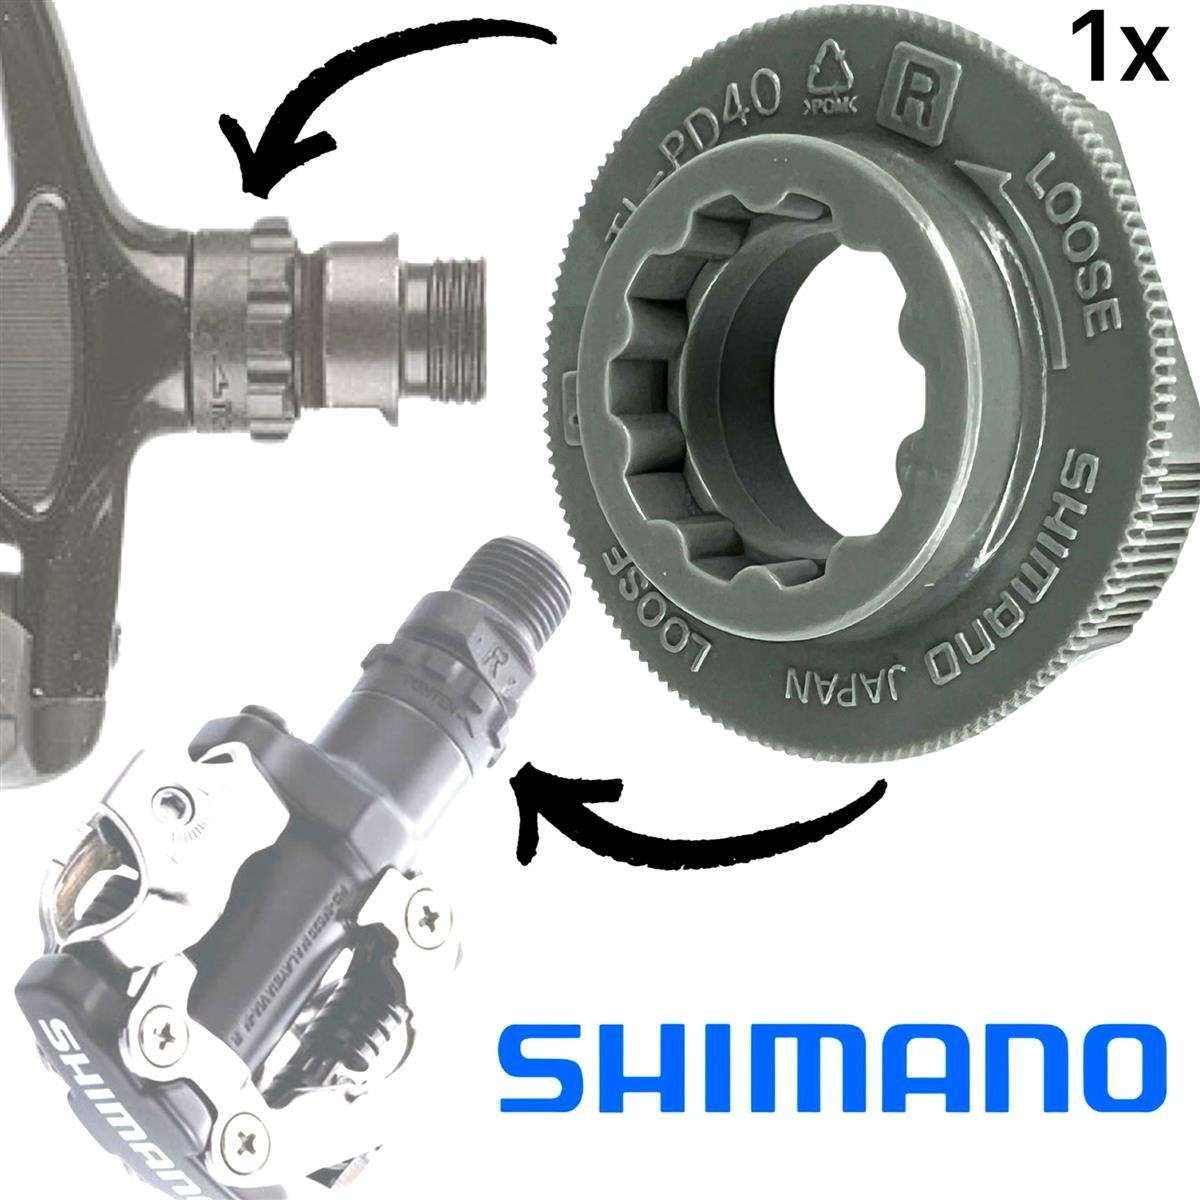 Shimano Fahrrad-Montageständer Shimano Demontage TL-PD40 Montage Werkzeug & für Pedalachse